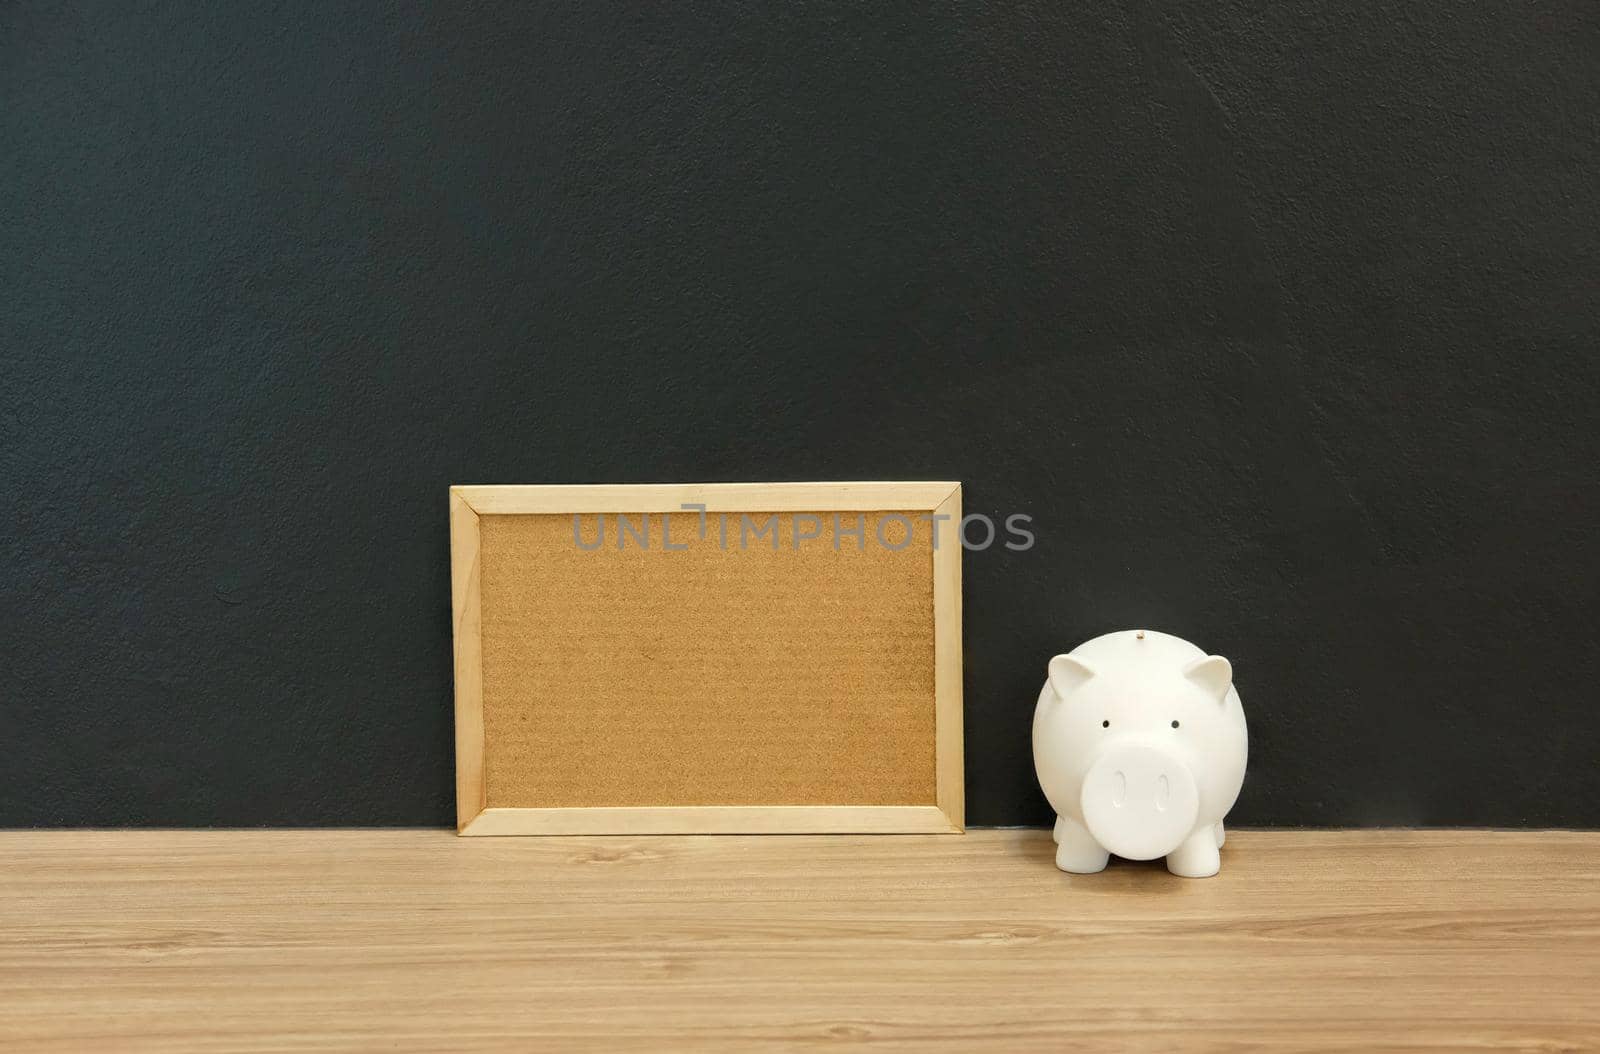 cork board piggy bank on wooden desk. money saving finance investment concept